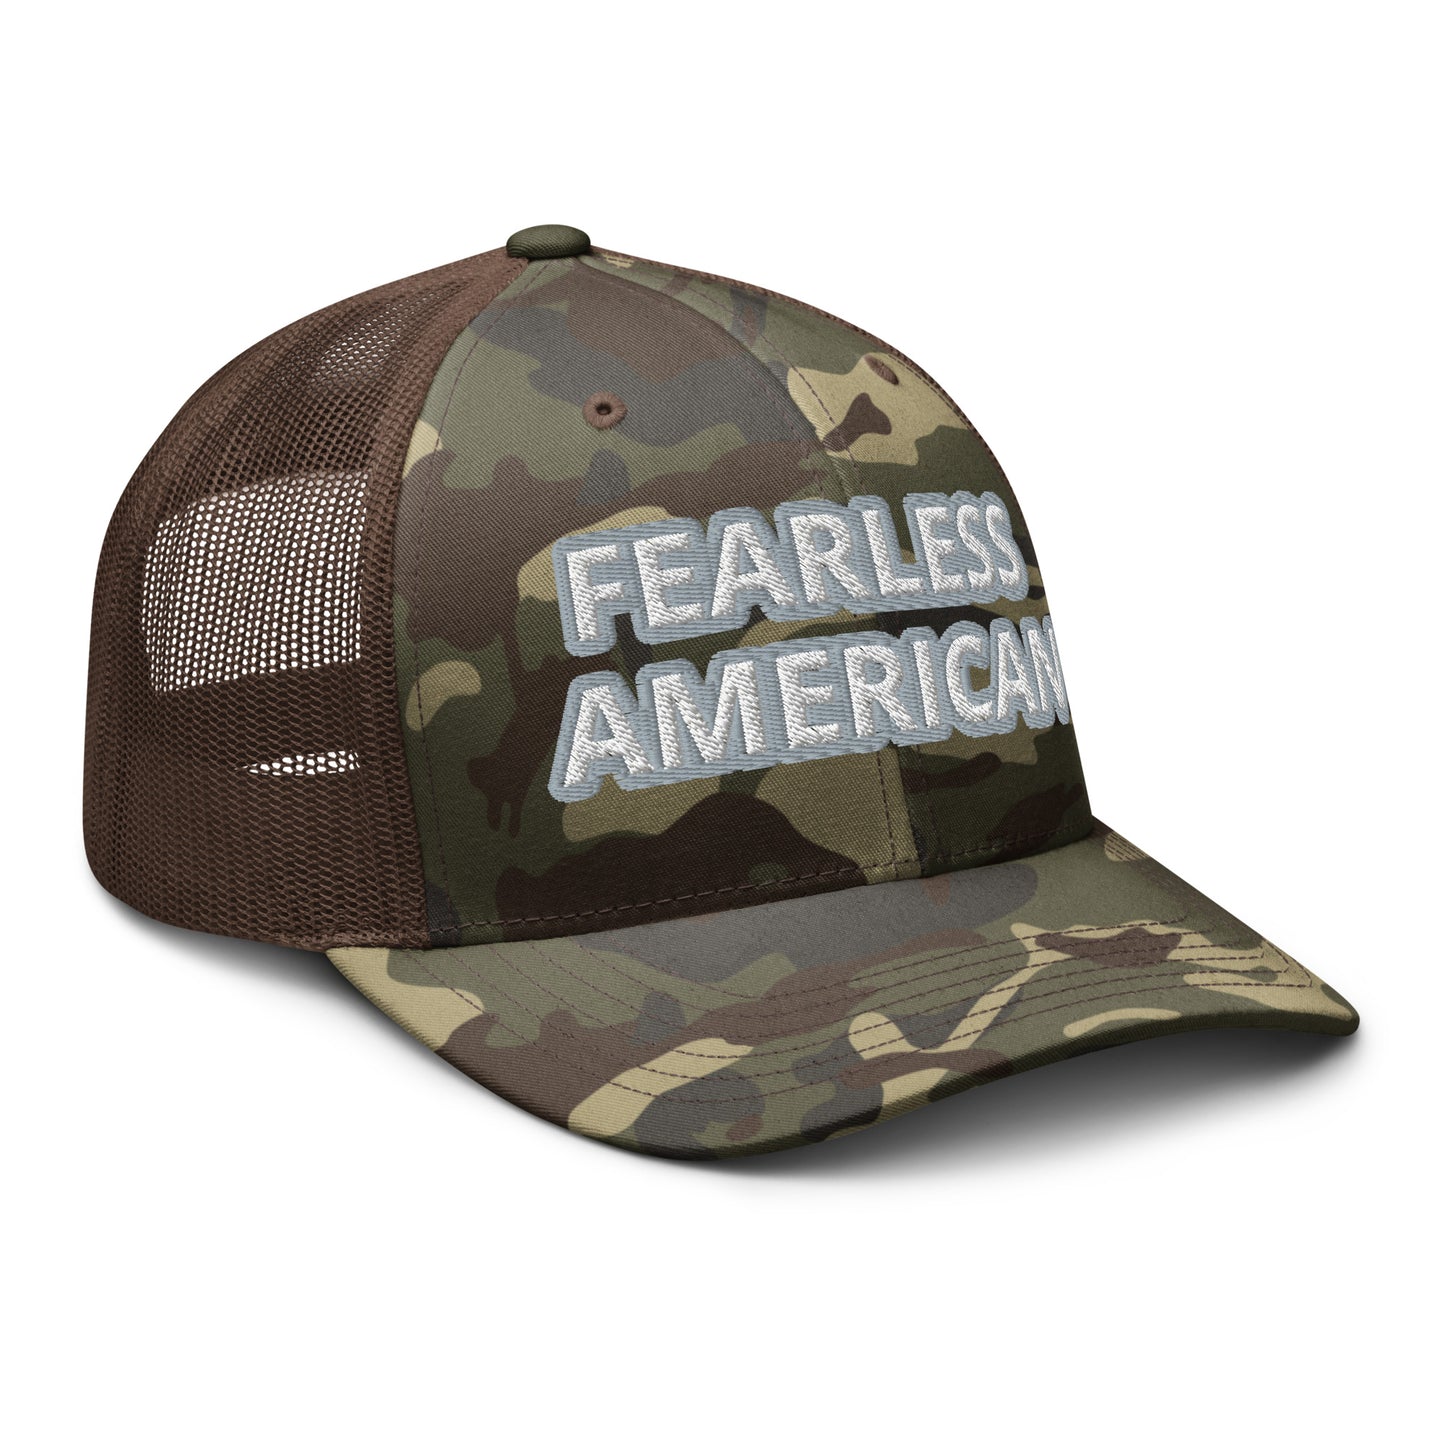 Fearless American Camouflage trucker hat